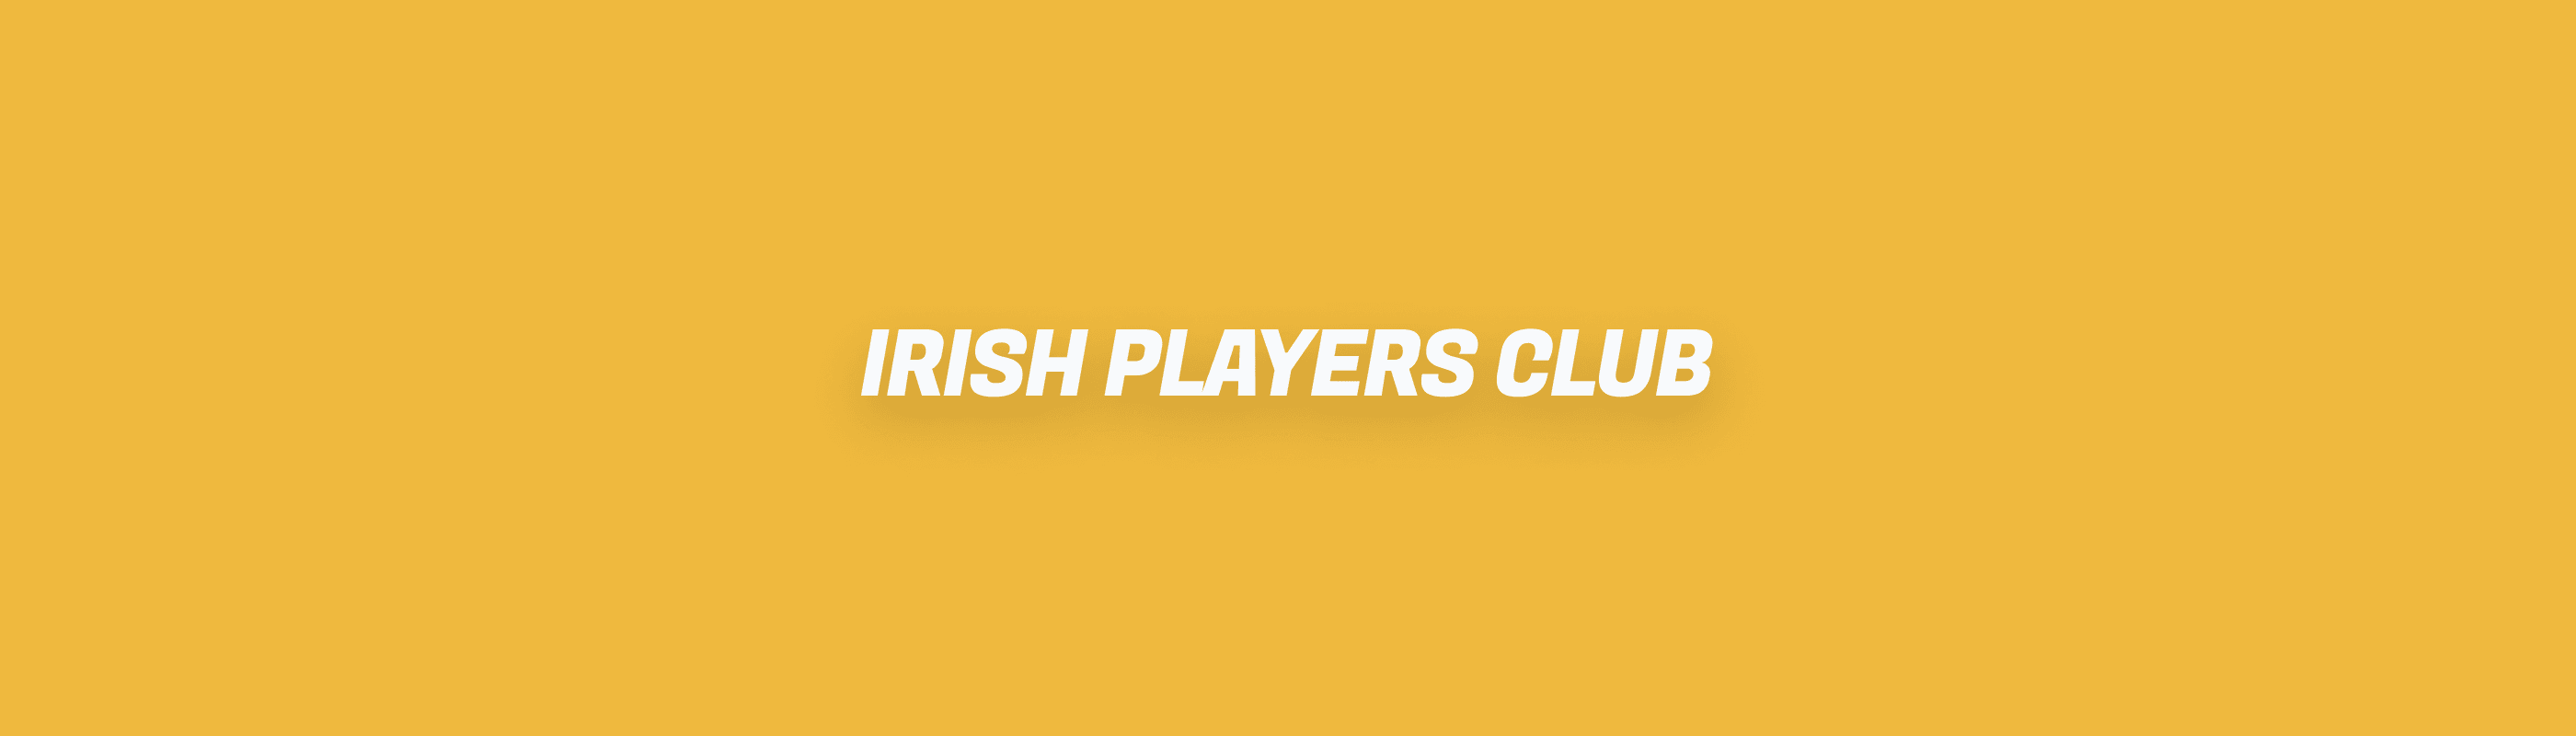 TheIrishPlayersClub banner